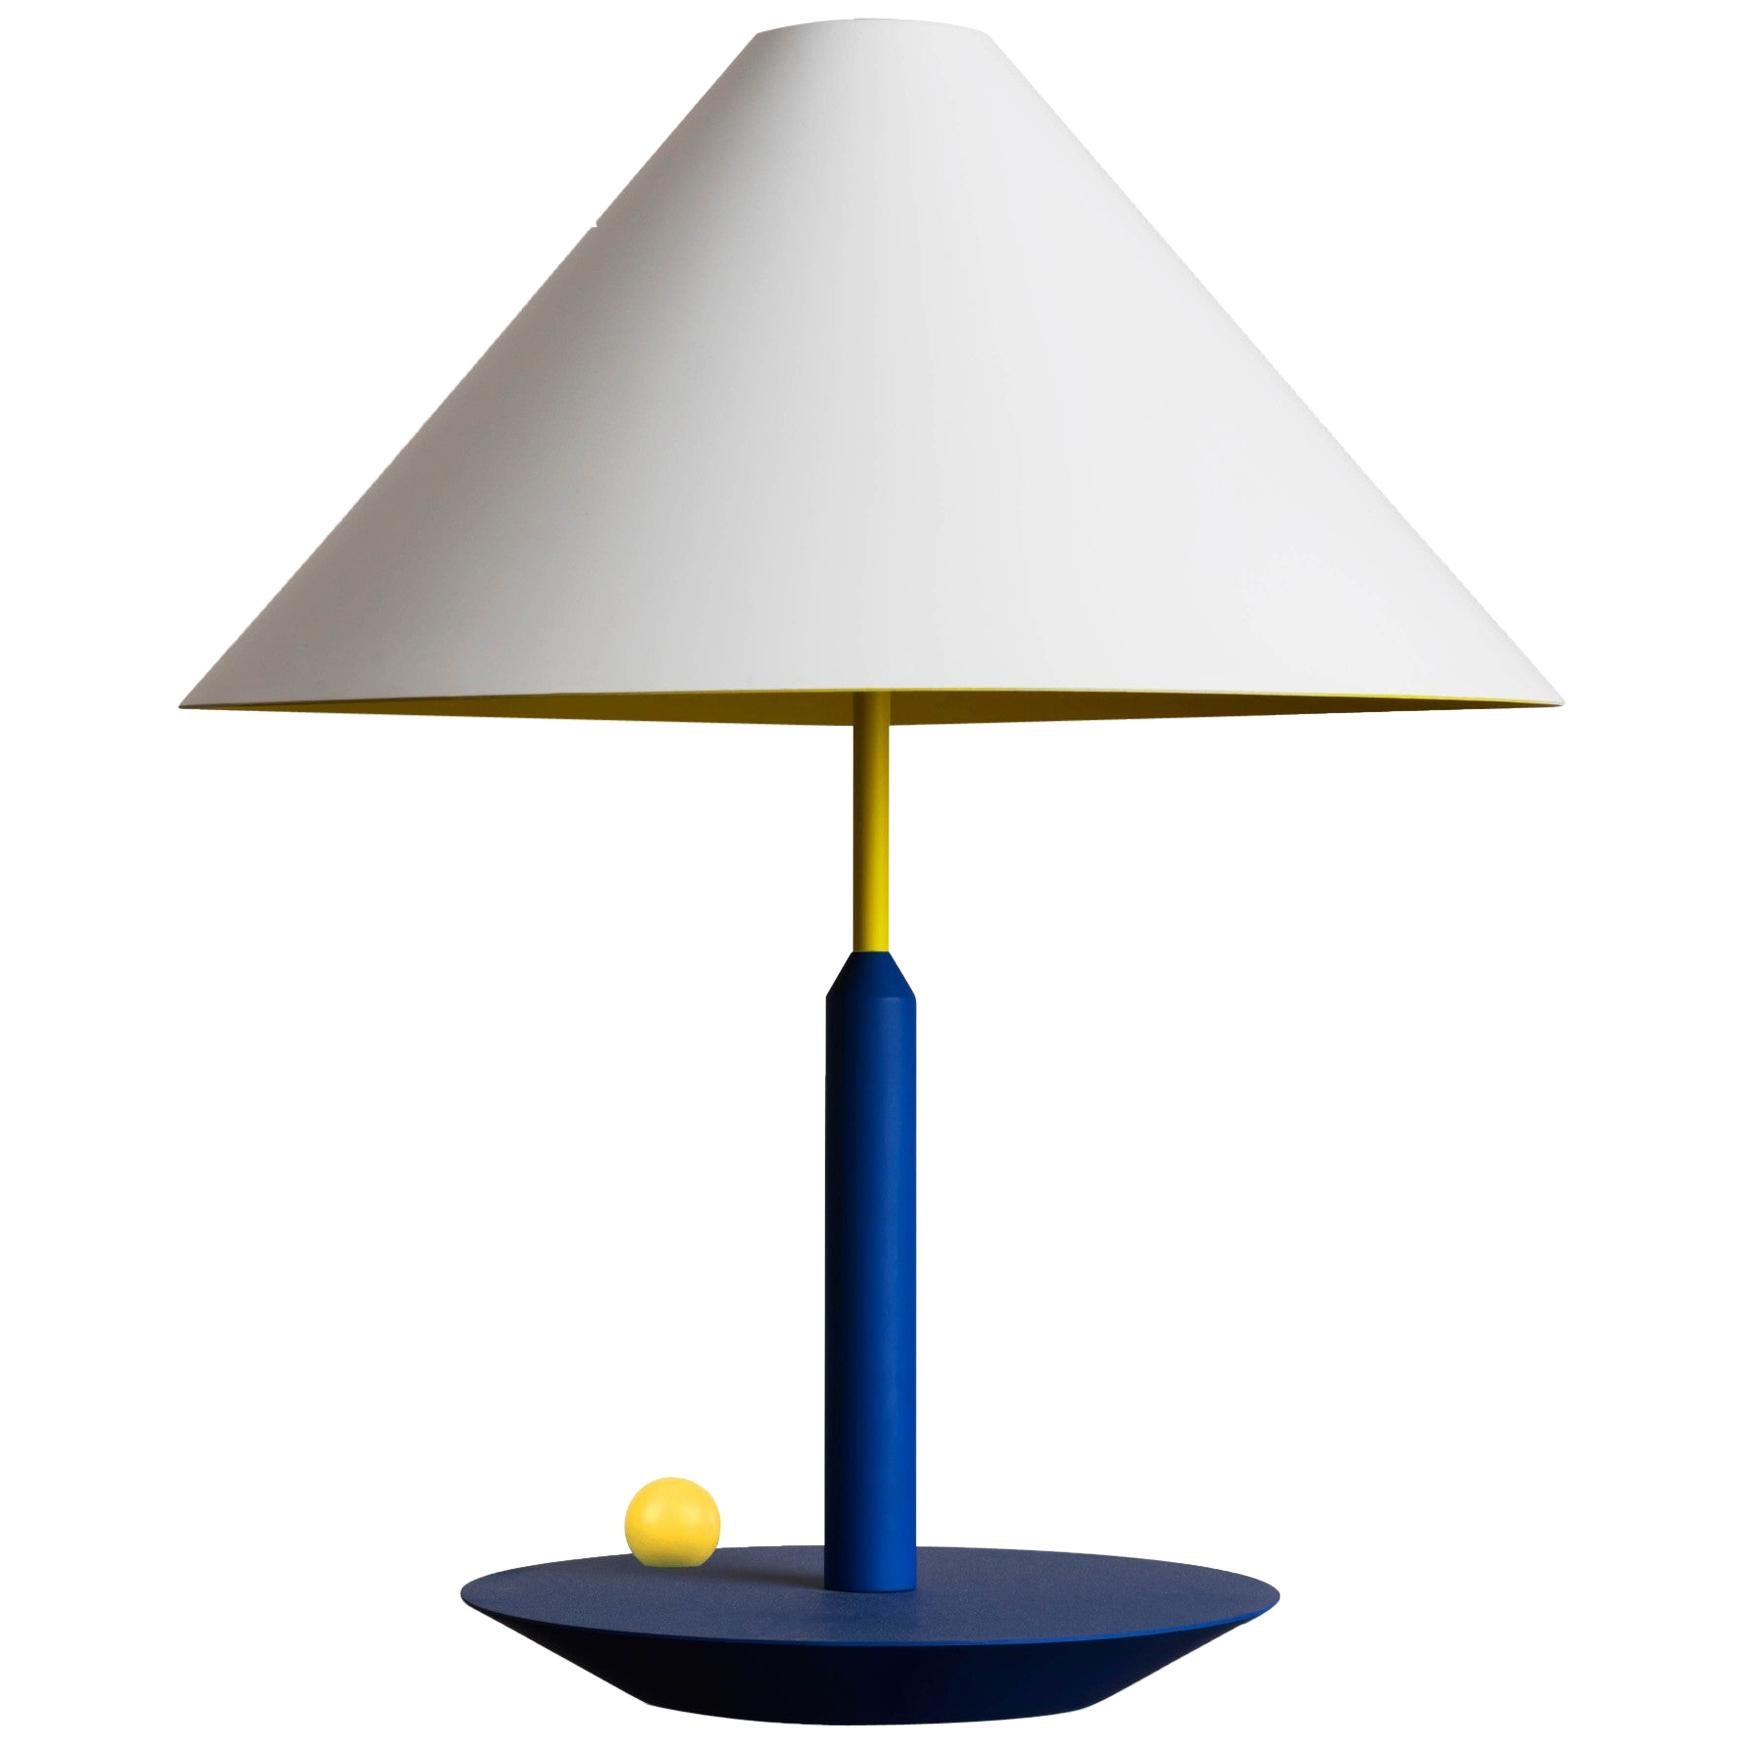 Colorful Table Lamp by Thomas Dariel